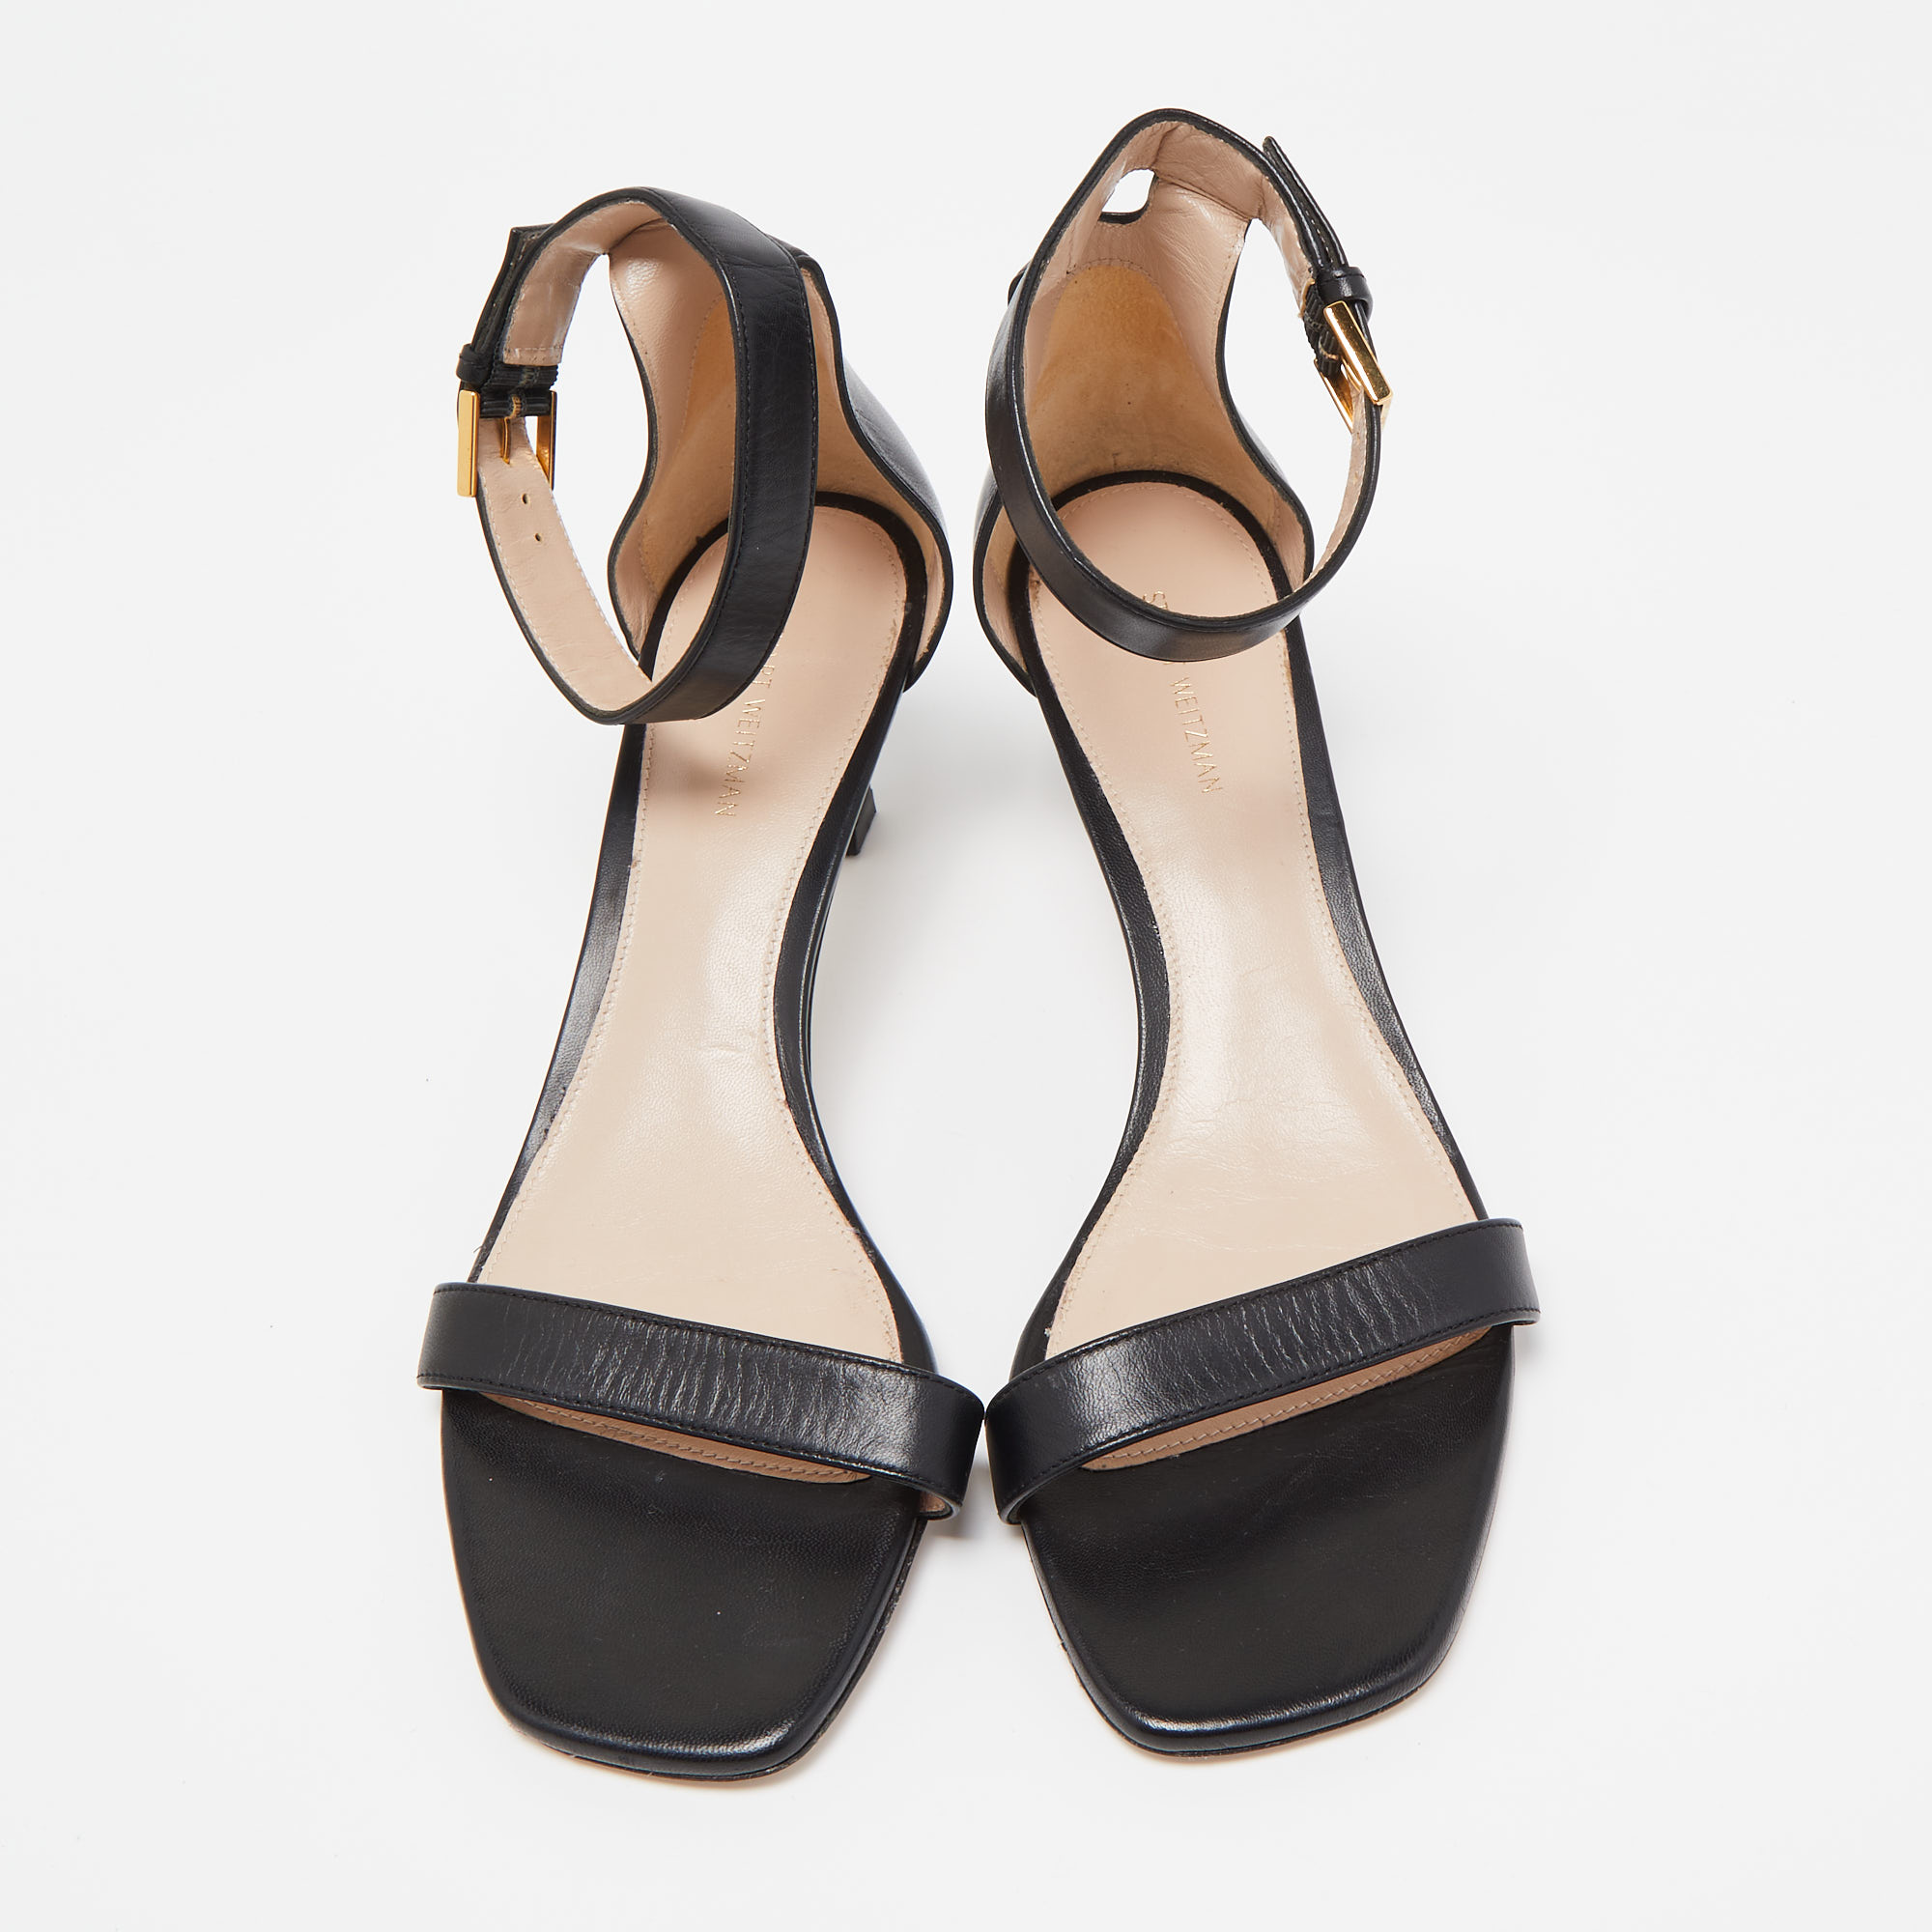 Stuart Weitzman Black Leather Ankle Strap Sandals Size 39.5